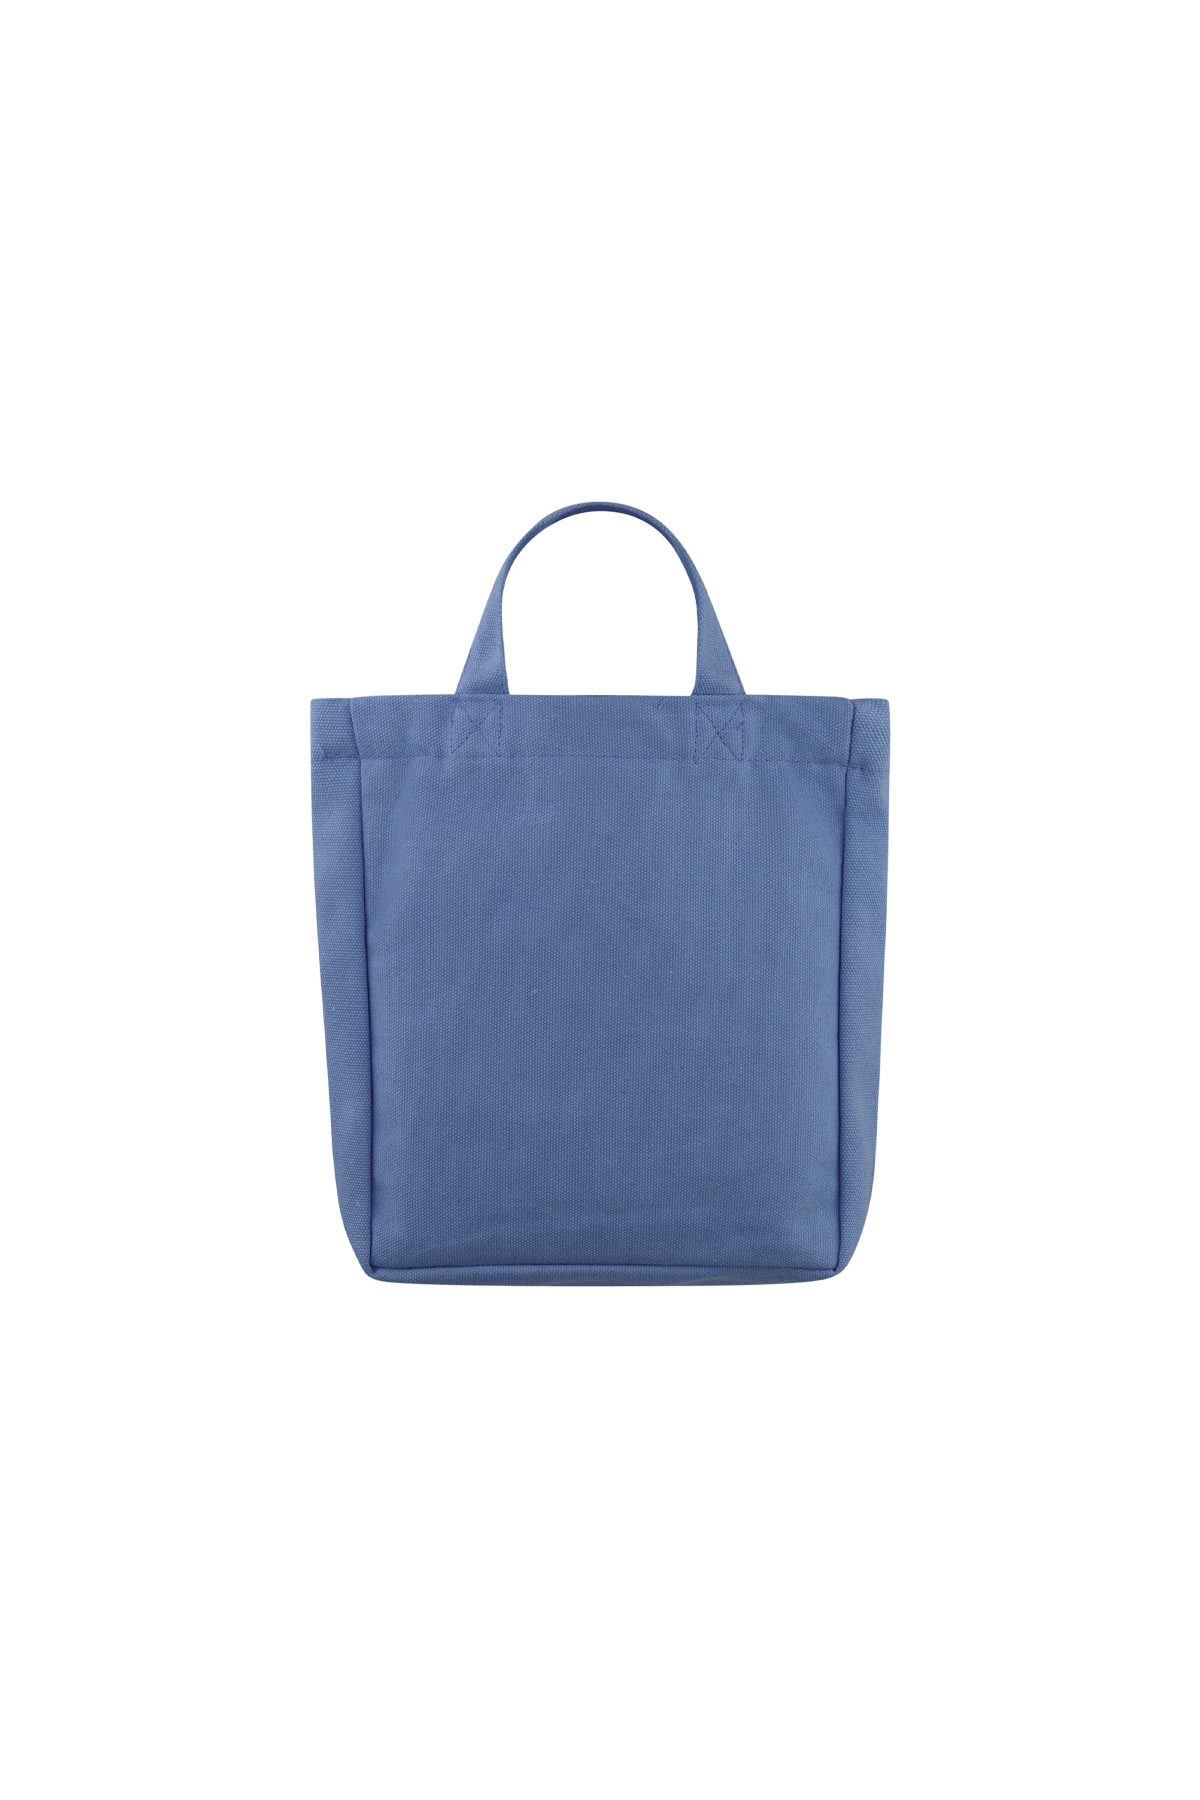 Petit sac en jean incontournable - bleu Image4